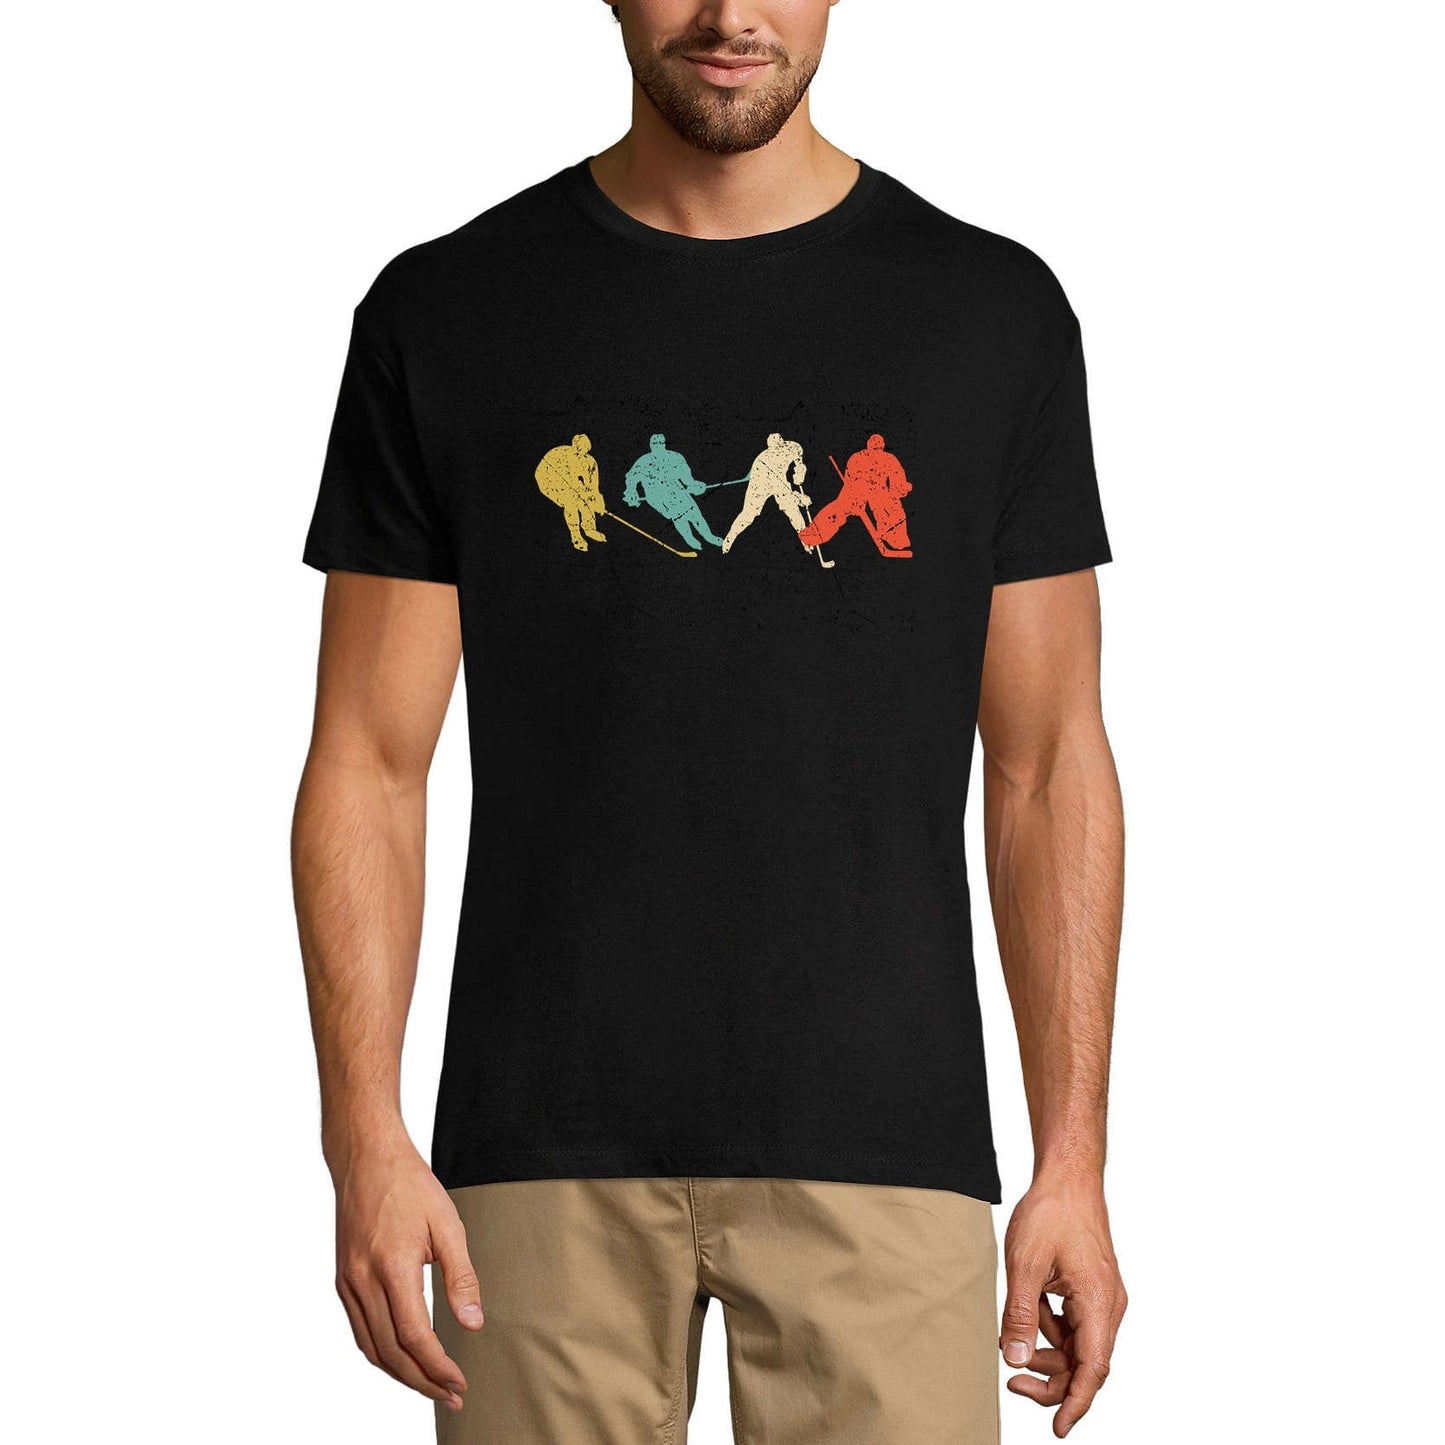 ULTRABASIC Men's Vintage T-Shirt Hockey Team Squad - Retro Tee Shirt for Hockey Player